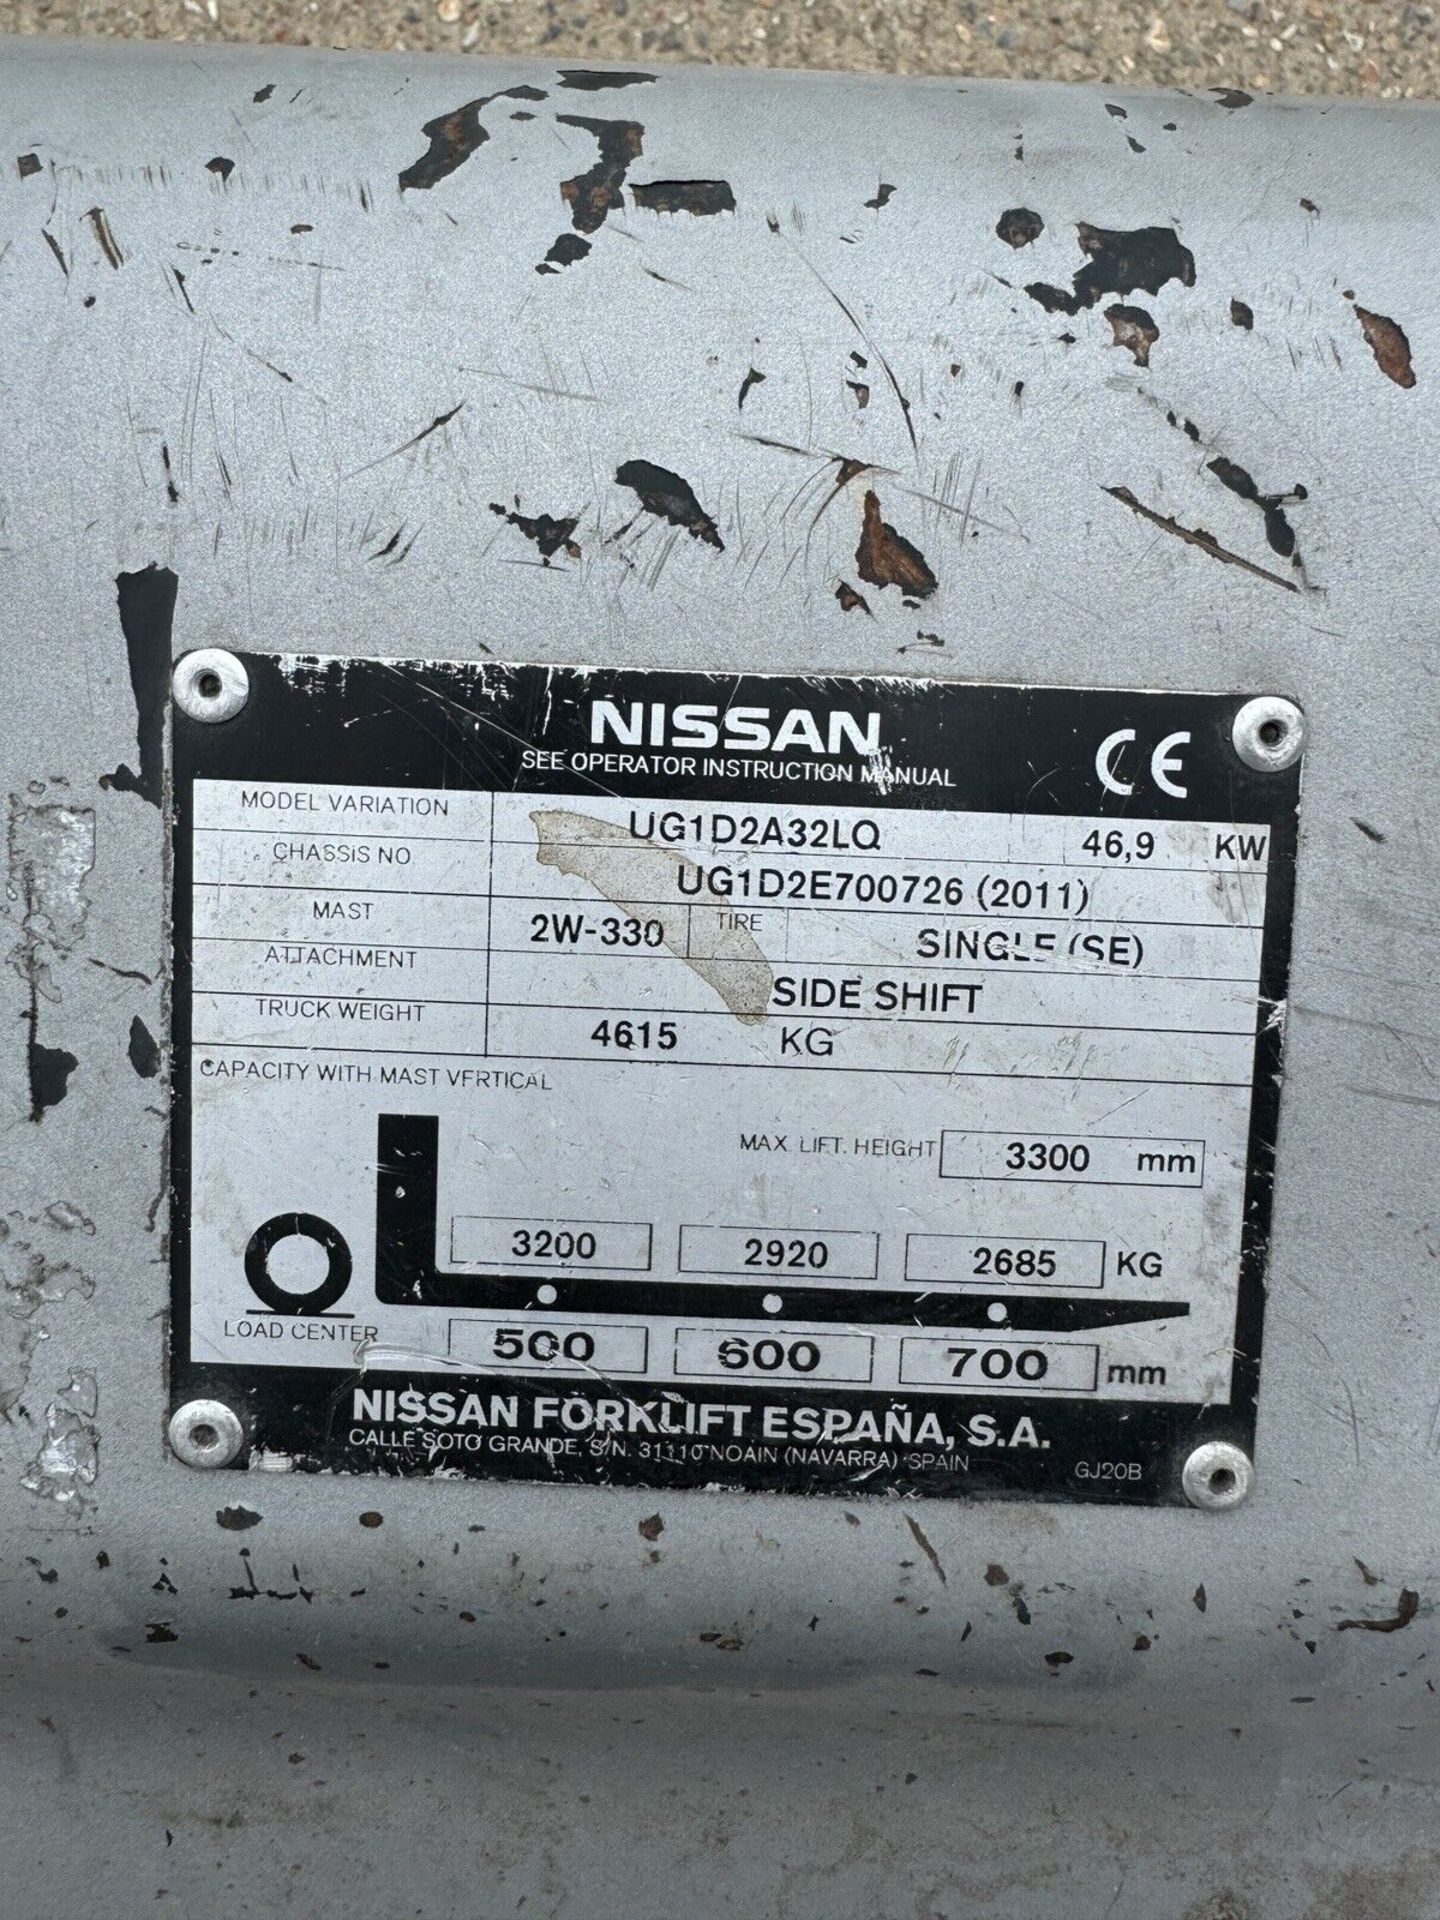 NISSAN, 3.2 Tonne - Gas Forklift Truck - Image 5 of 6